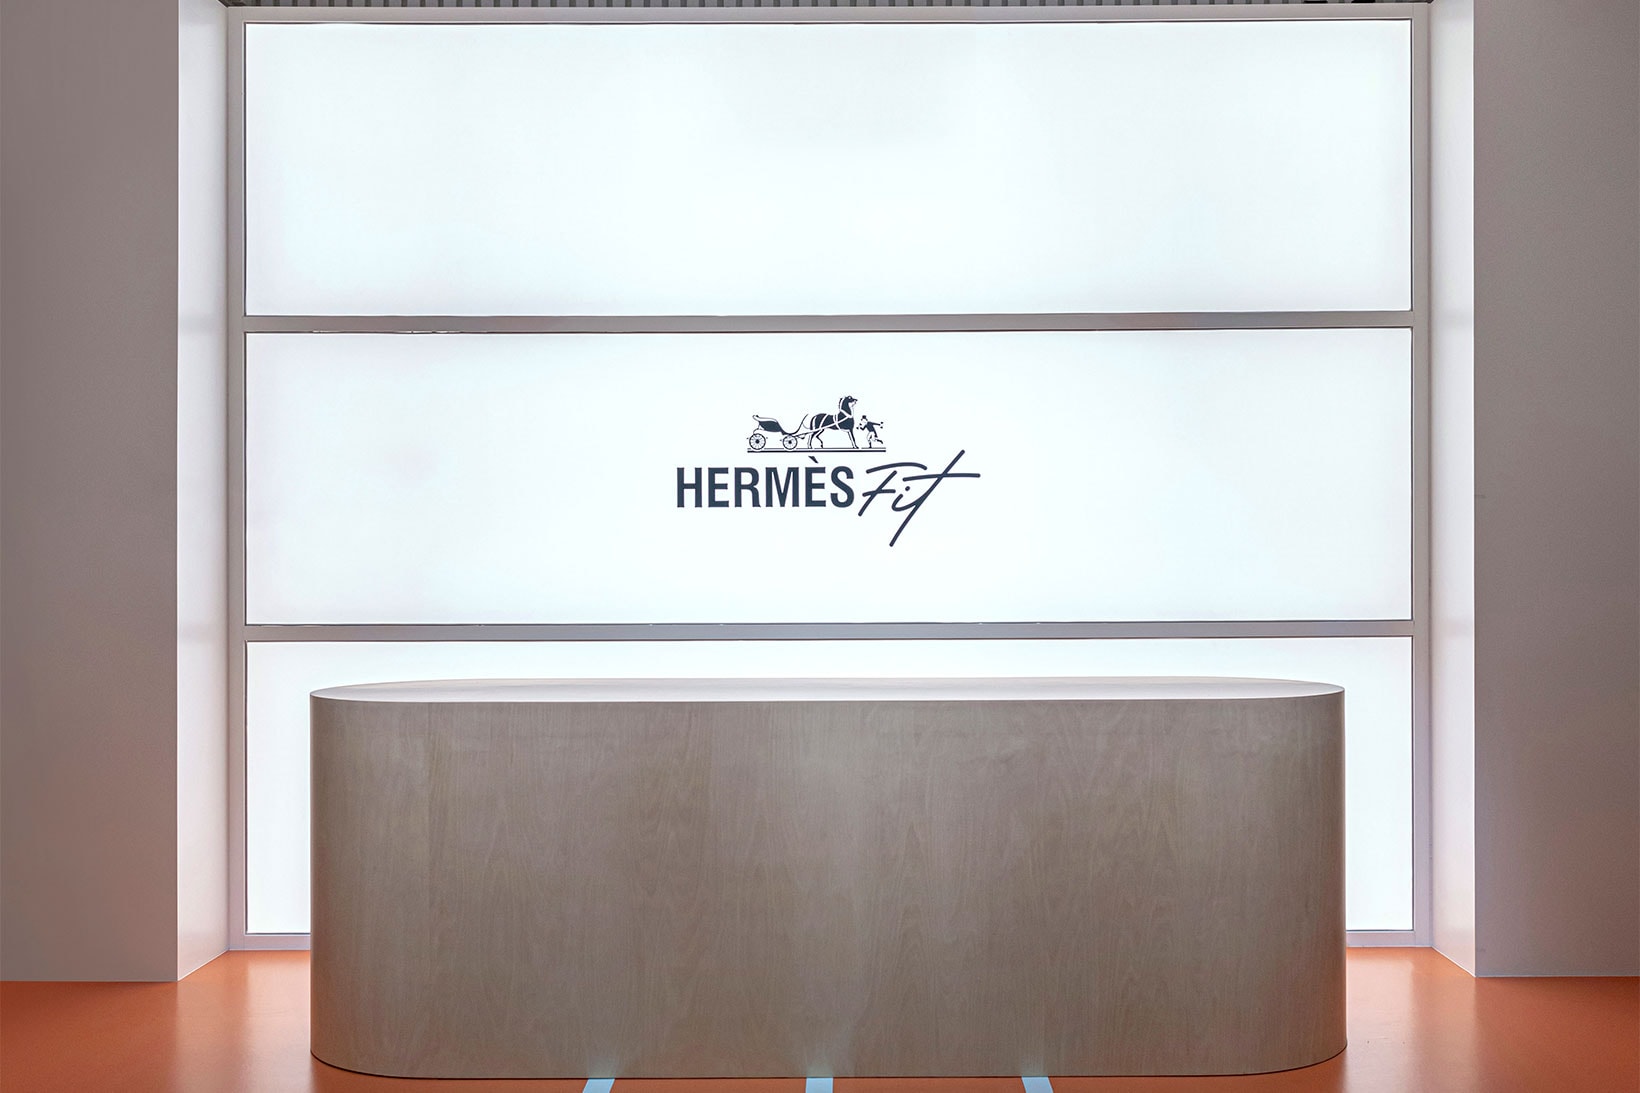 Hermes Fitness Event Pop-Up Hong Kong Boxing Ring Climbing Wall Kettlebells Ping Pong Table Images